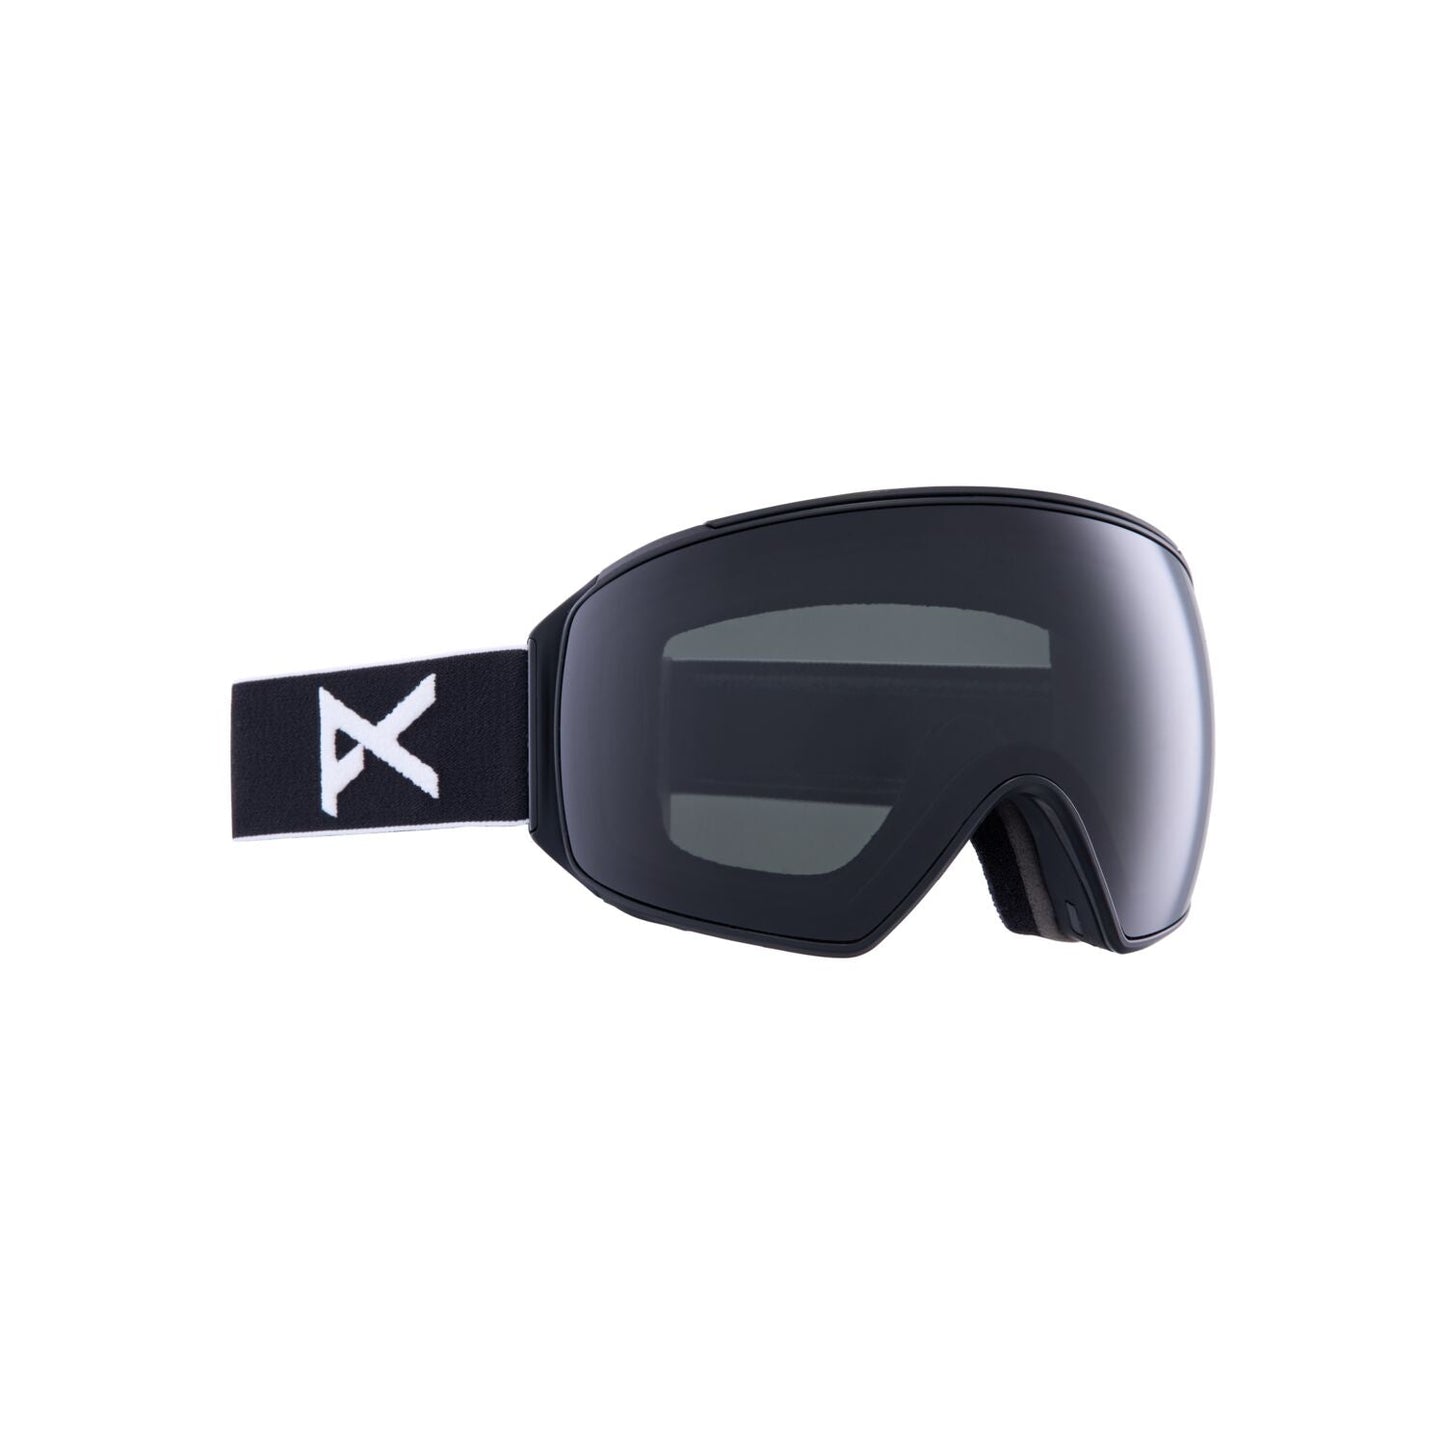 Anon M4 Polarized Toric Goggles + Bonus PERCEIVE Lens + MFI Face Mask - OpenBox Default Title - Anon Snow Goggles